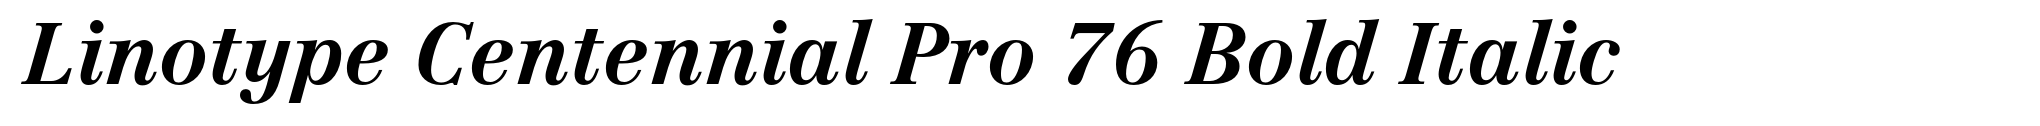 Linotype Centennial Pro 76 Bold Italic image